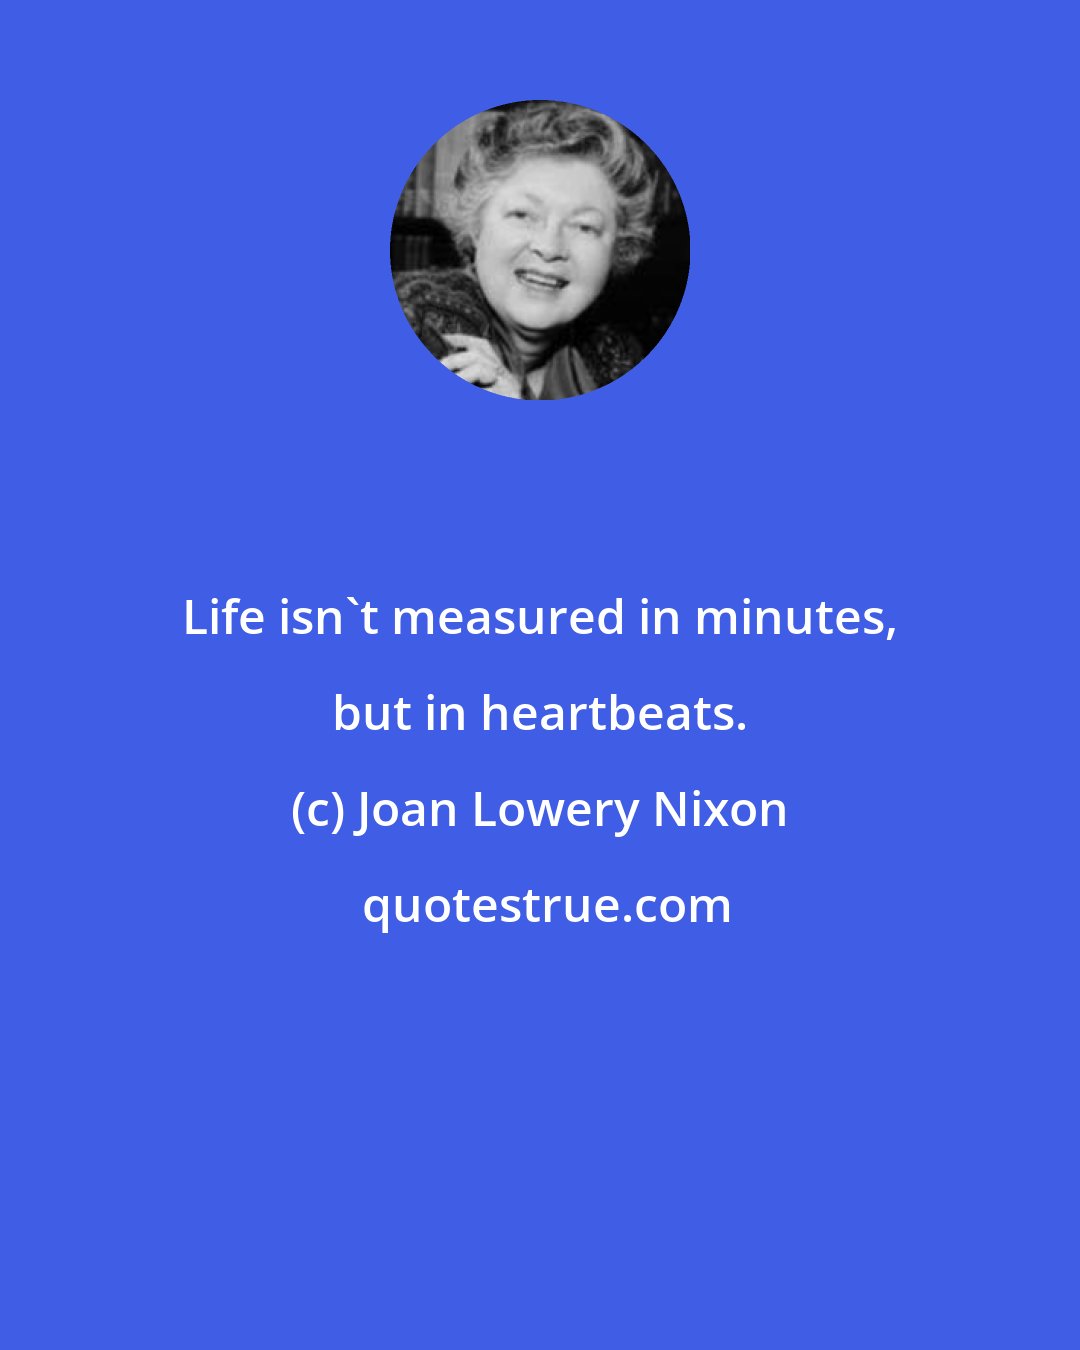 Joan Lowery Nixon: Life isn't measured in minutes, but in heartbeats.